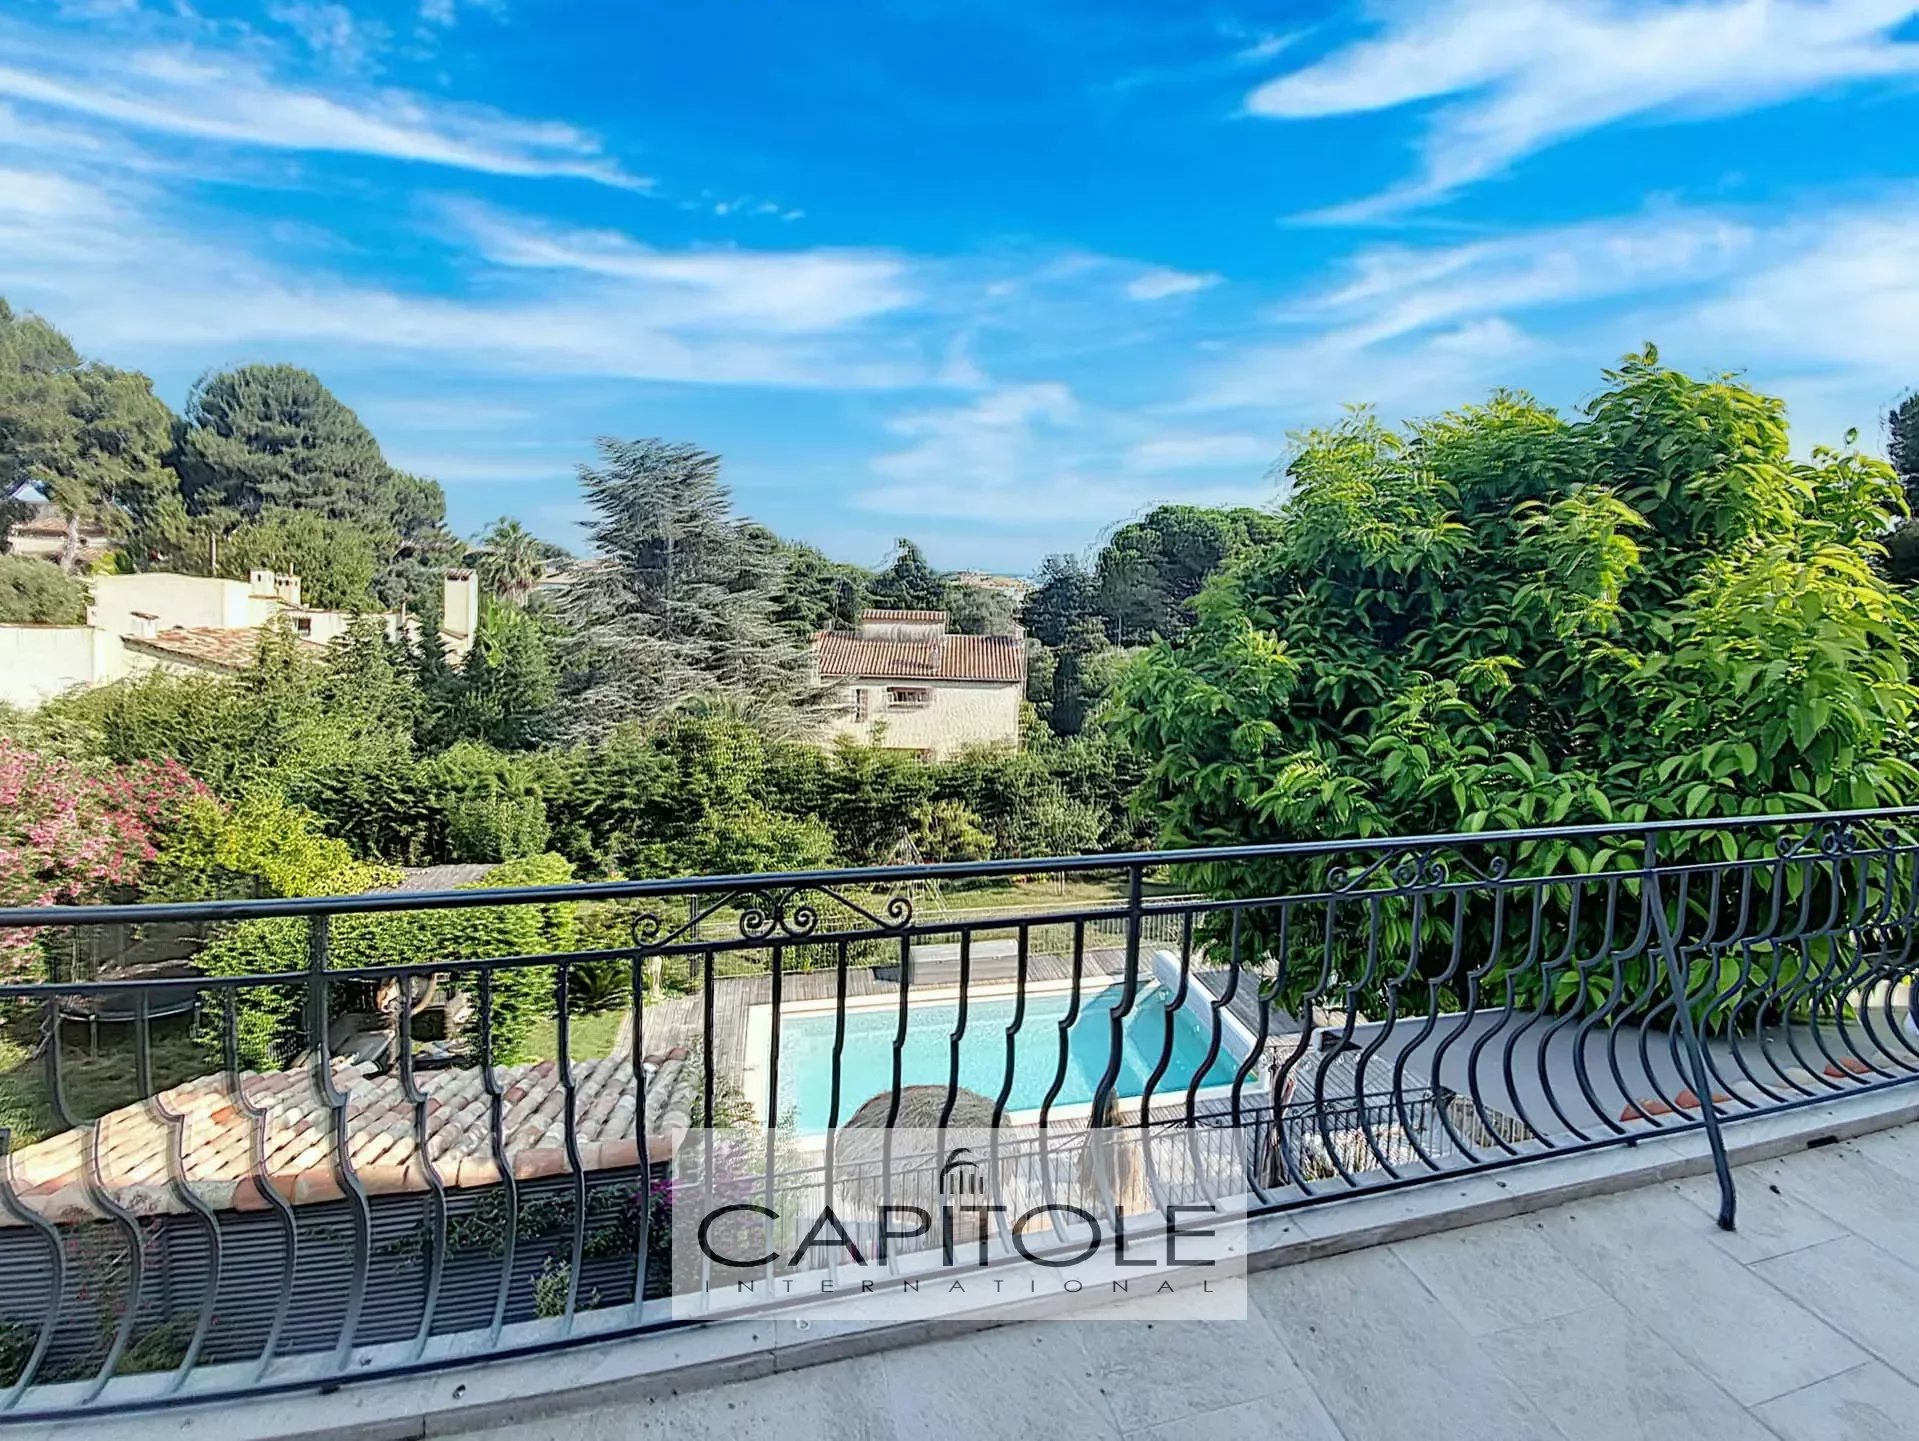 For sale, Antibes,  5 bedrooms villa  255 m², swimming pool,  landscaped garden, garage